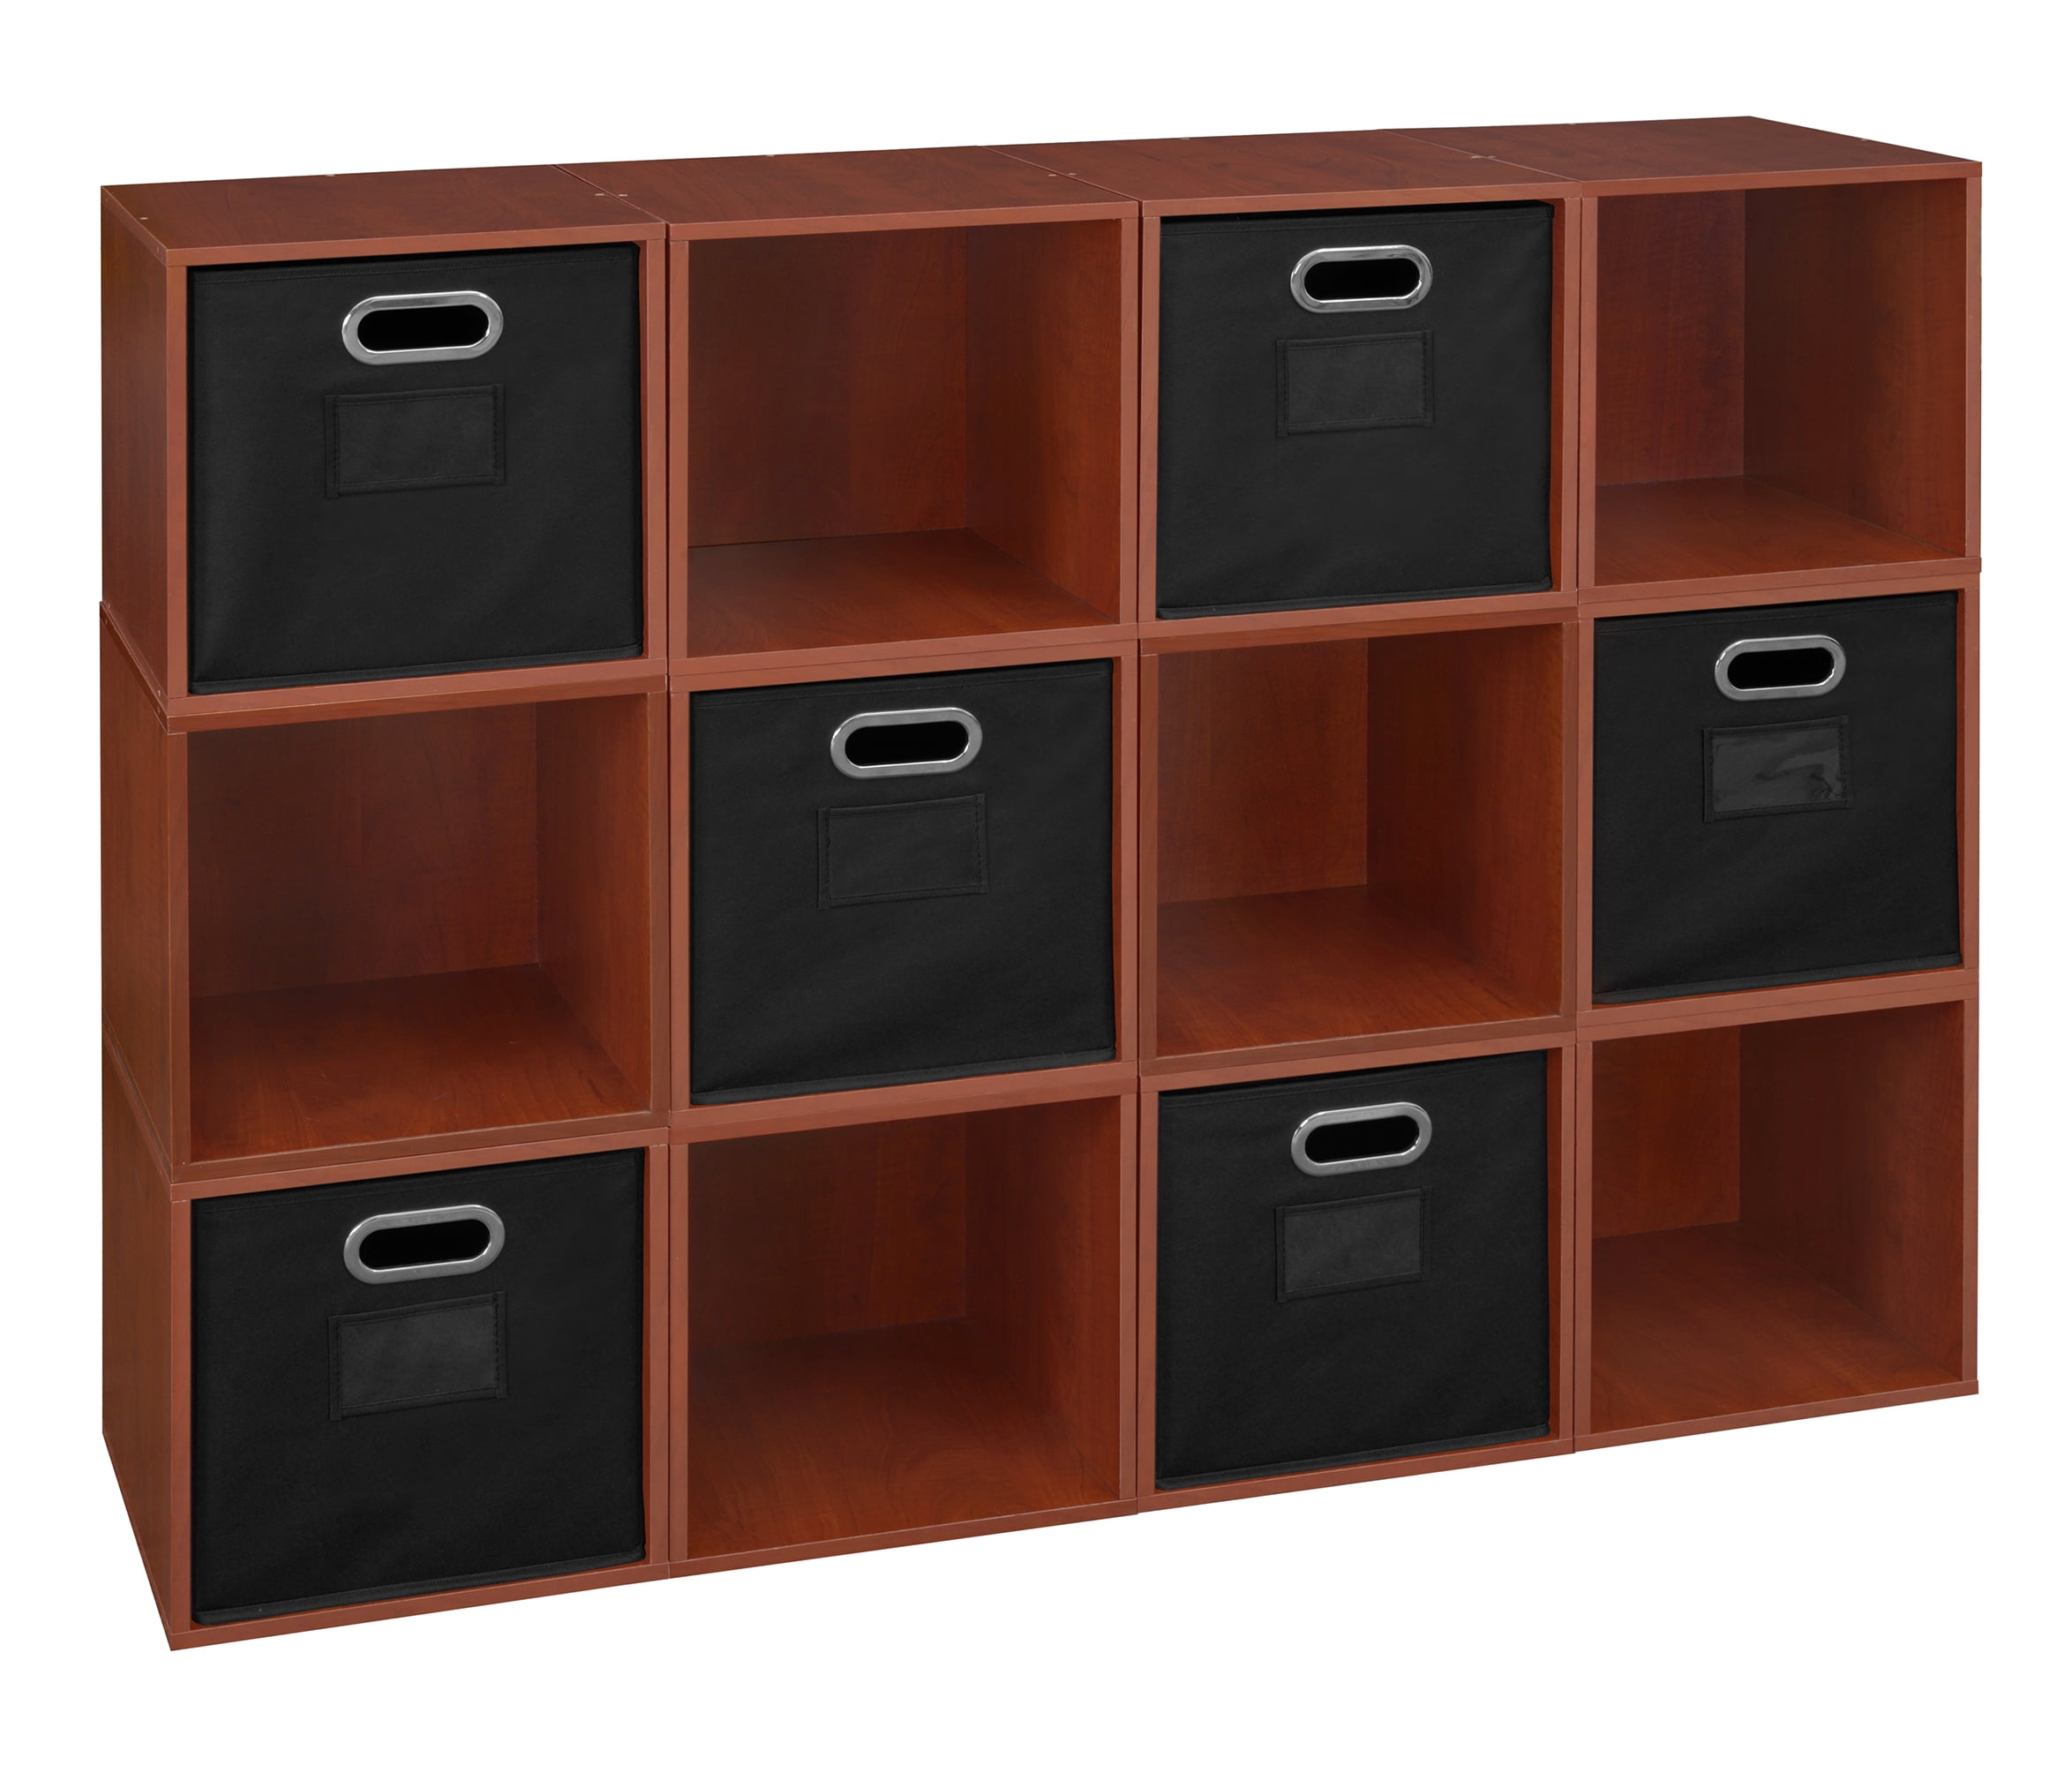 Niche Cubo Storage Set - 12 Cubes and 6 Canvas Bins- Cherry/Black ...